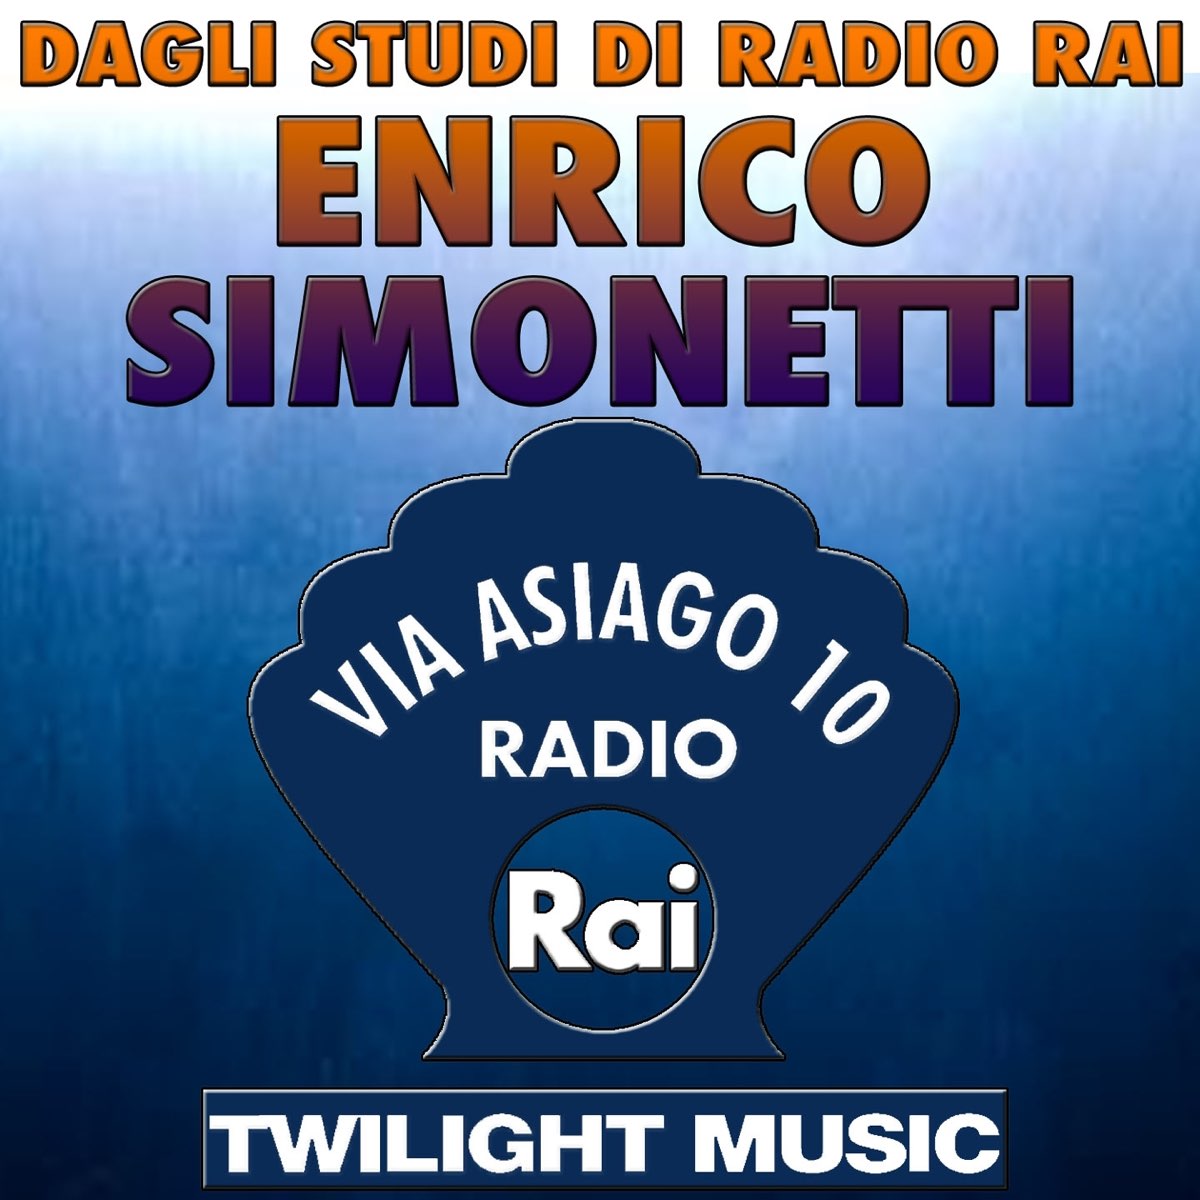 Dagli studi di Radio Rai: Enrico Simonetti (Via Asiago 10, Radio Rai)”  álbum de Enrico Simonetti en Apple Music